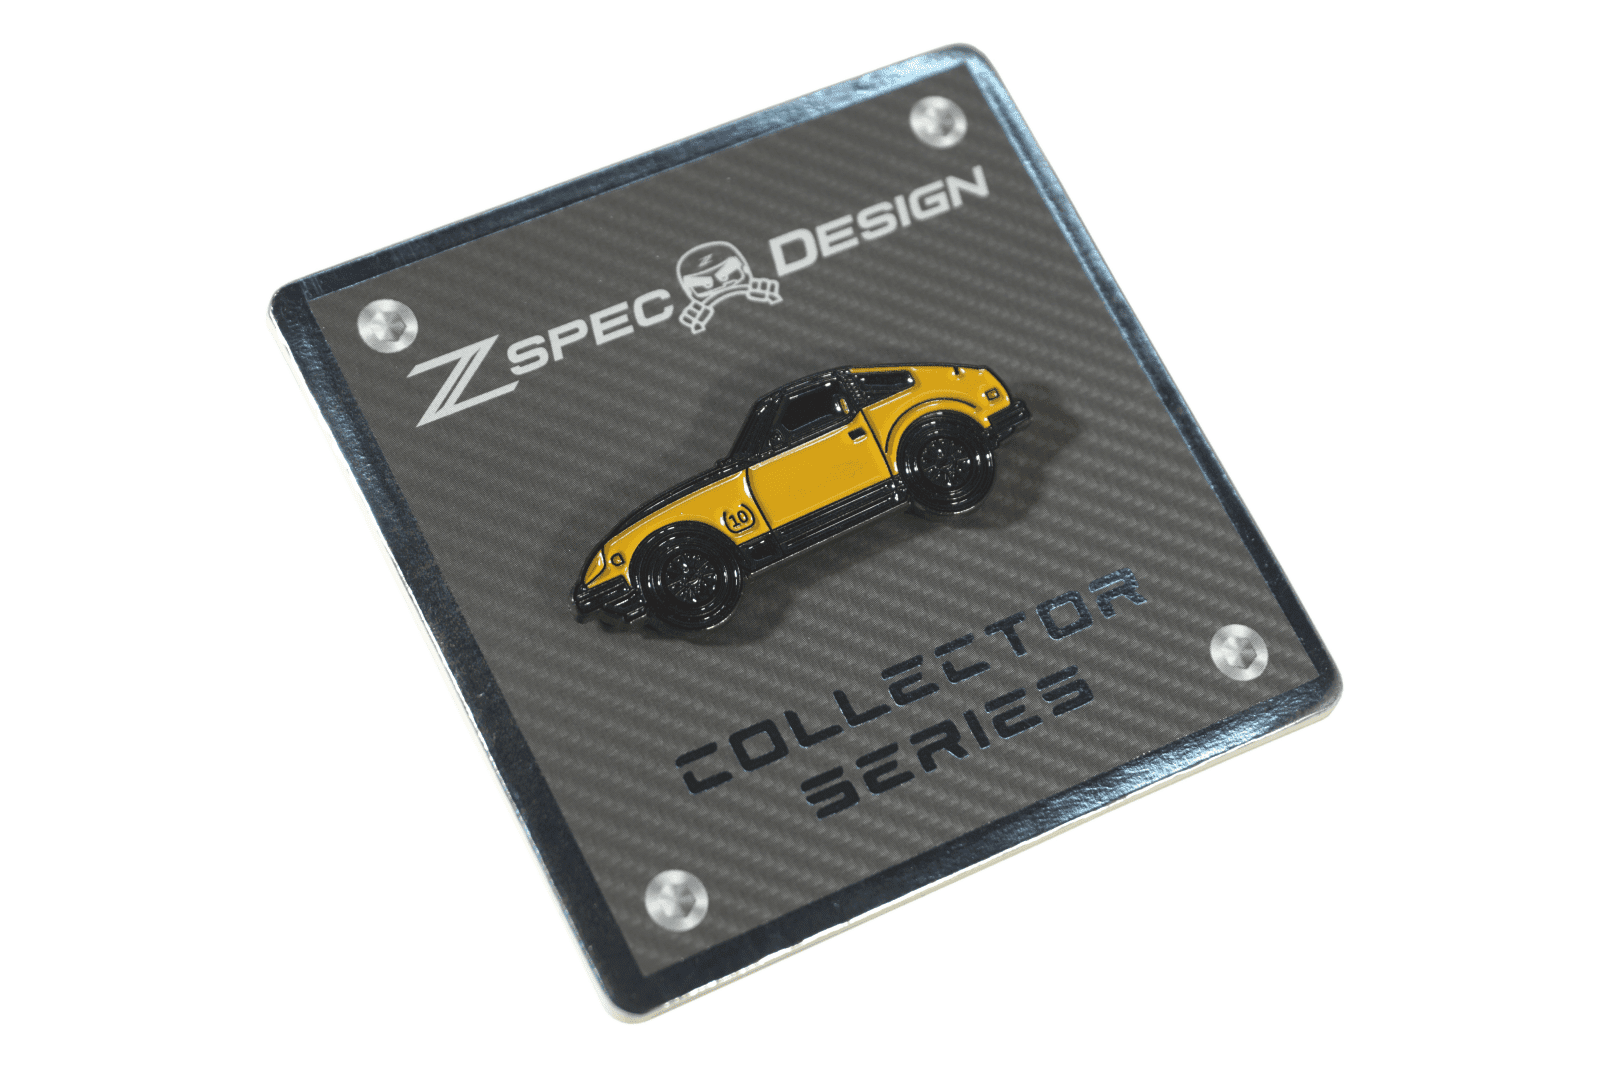 ZSPEC Datsun 280zx (S130) Anniversary Edition Lapel / Hat Pin